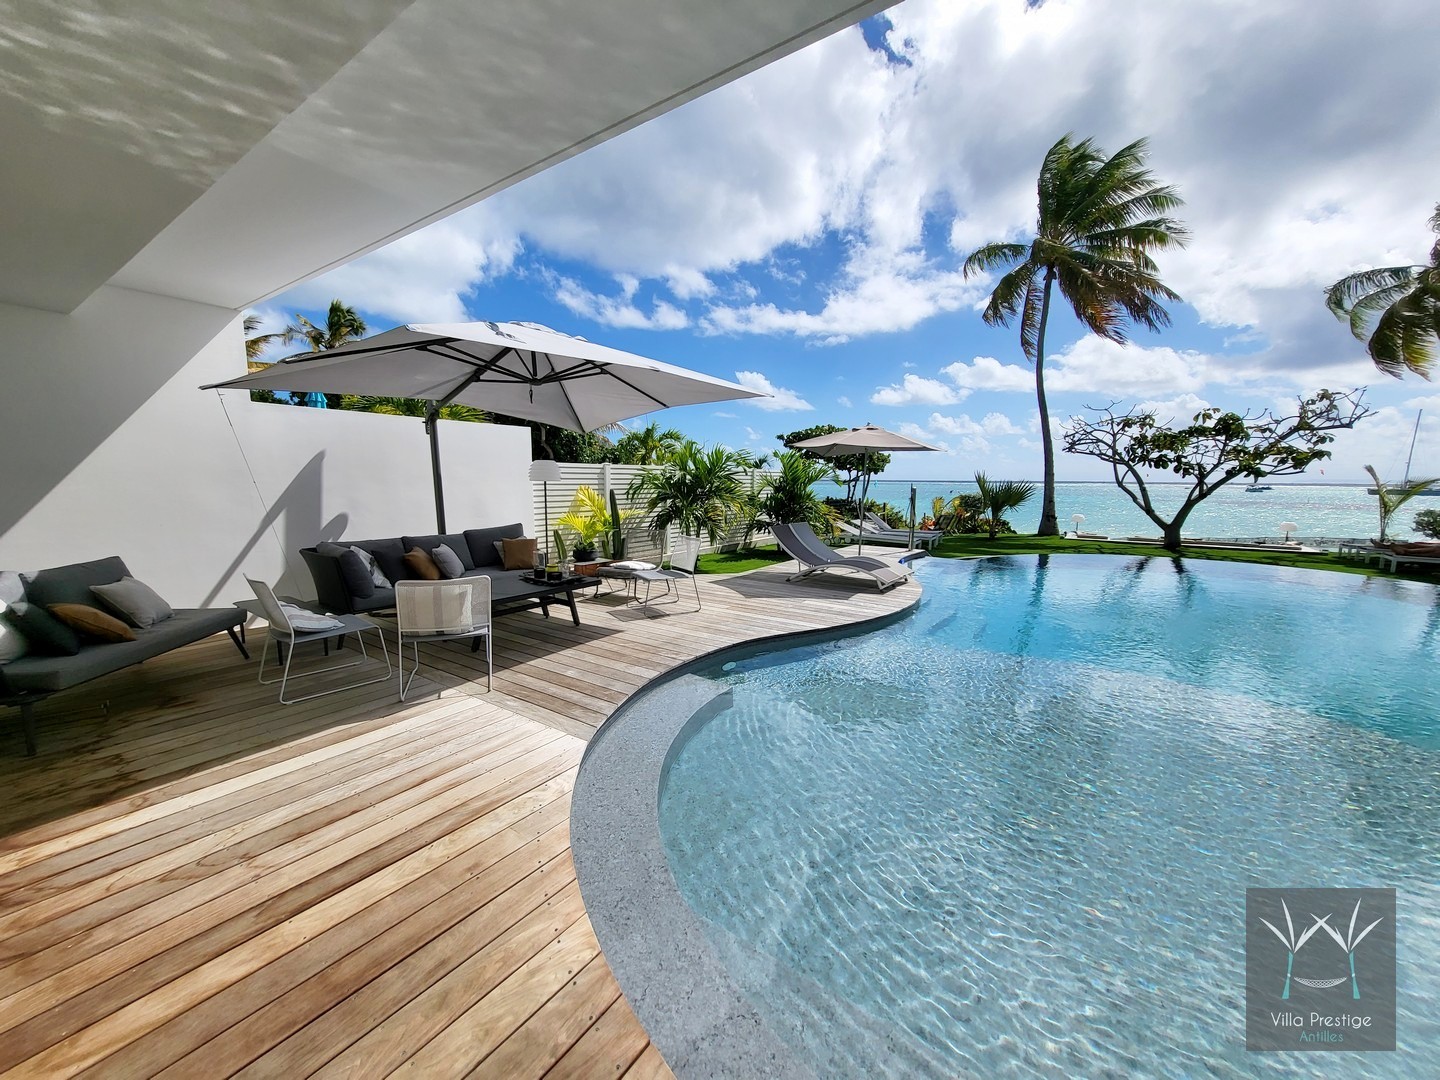 Delphy villa de location bord de mer avec piscine vacances guadeloupe